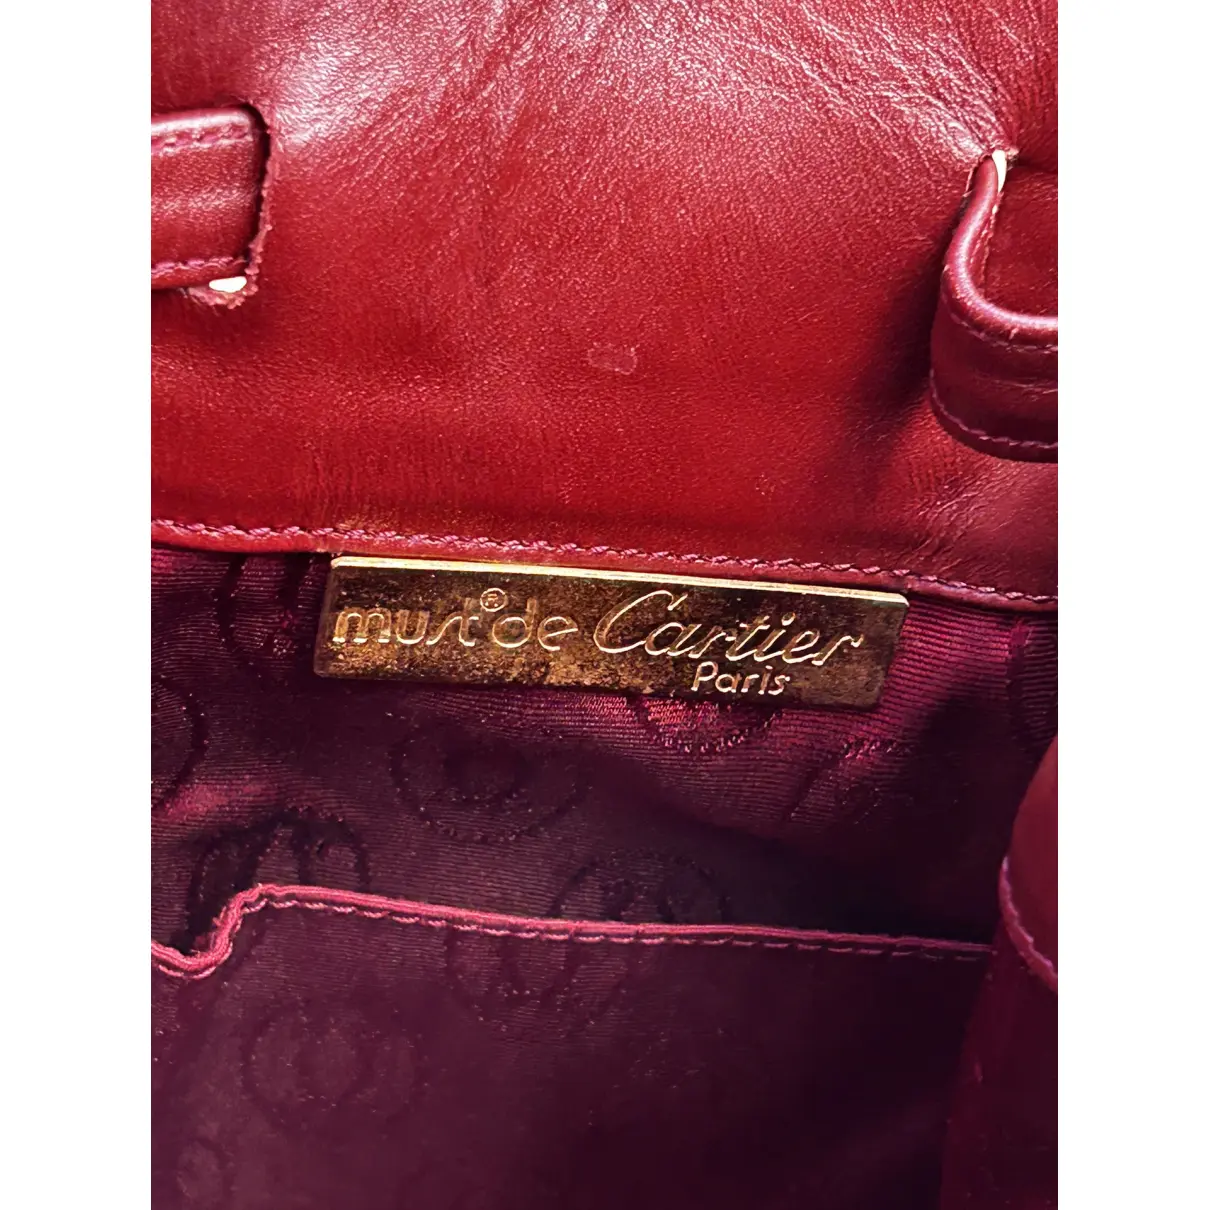 Buy Cartier Seau leather crossbody bag online